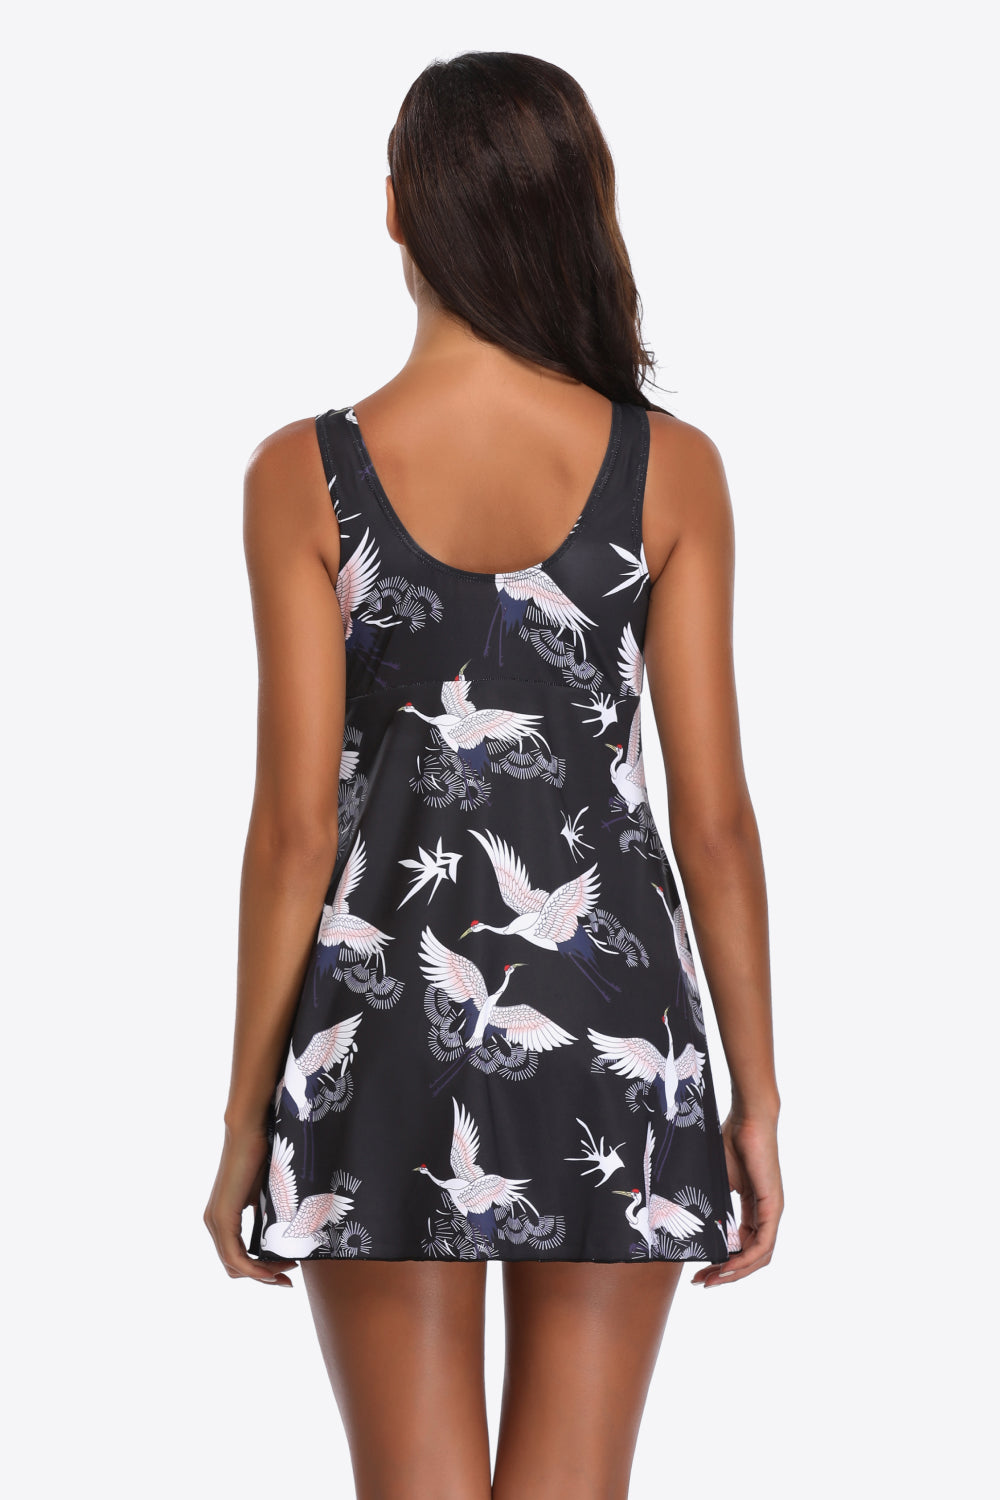 Full Size Animal Print Swim Dress - Swimwear One-Pieces - FITGGINS